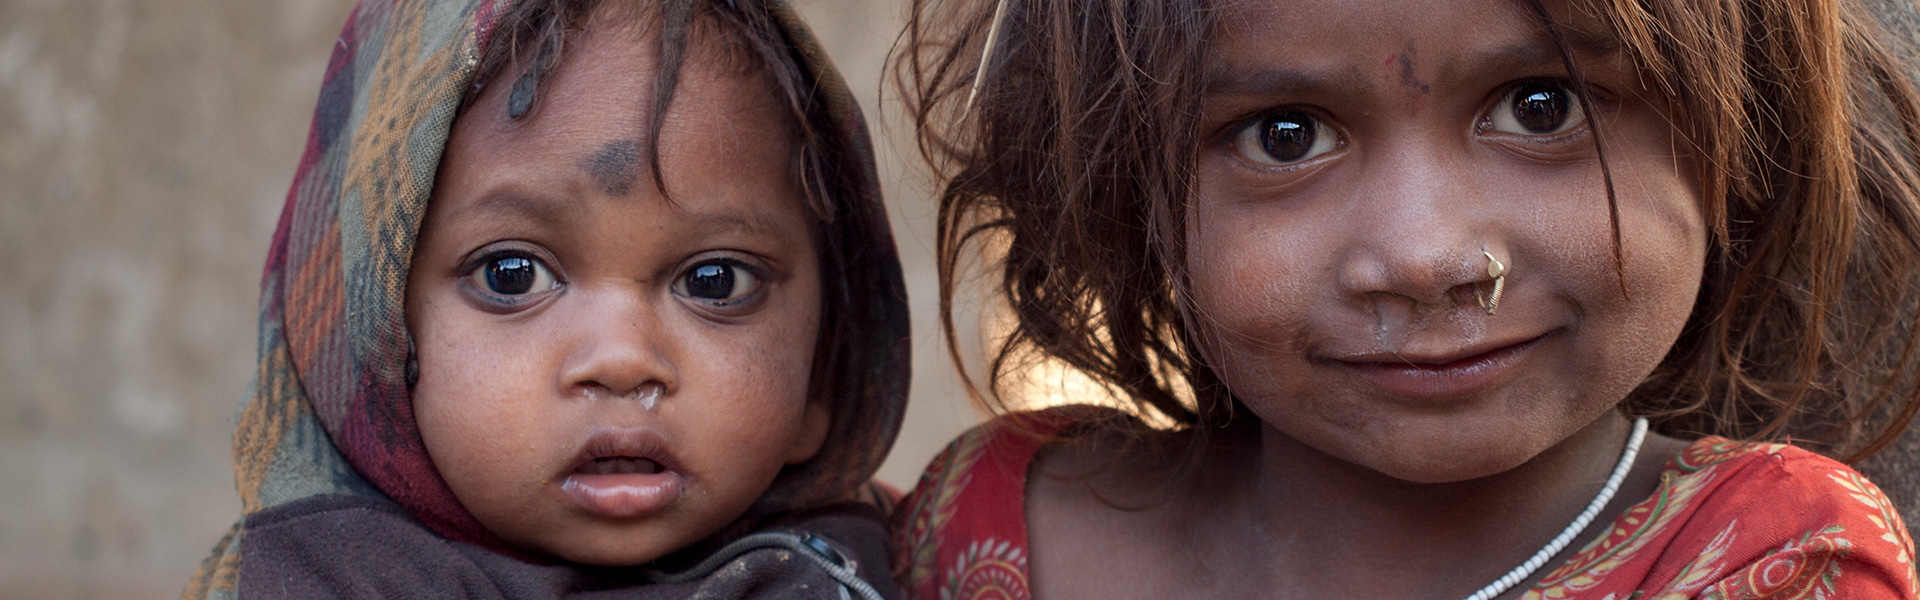 nepal-dalit-children